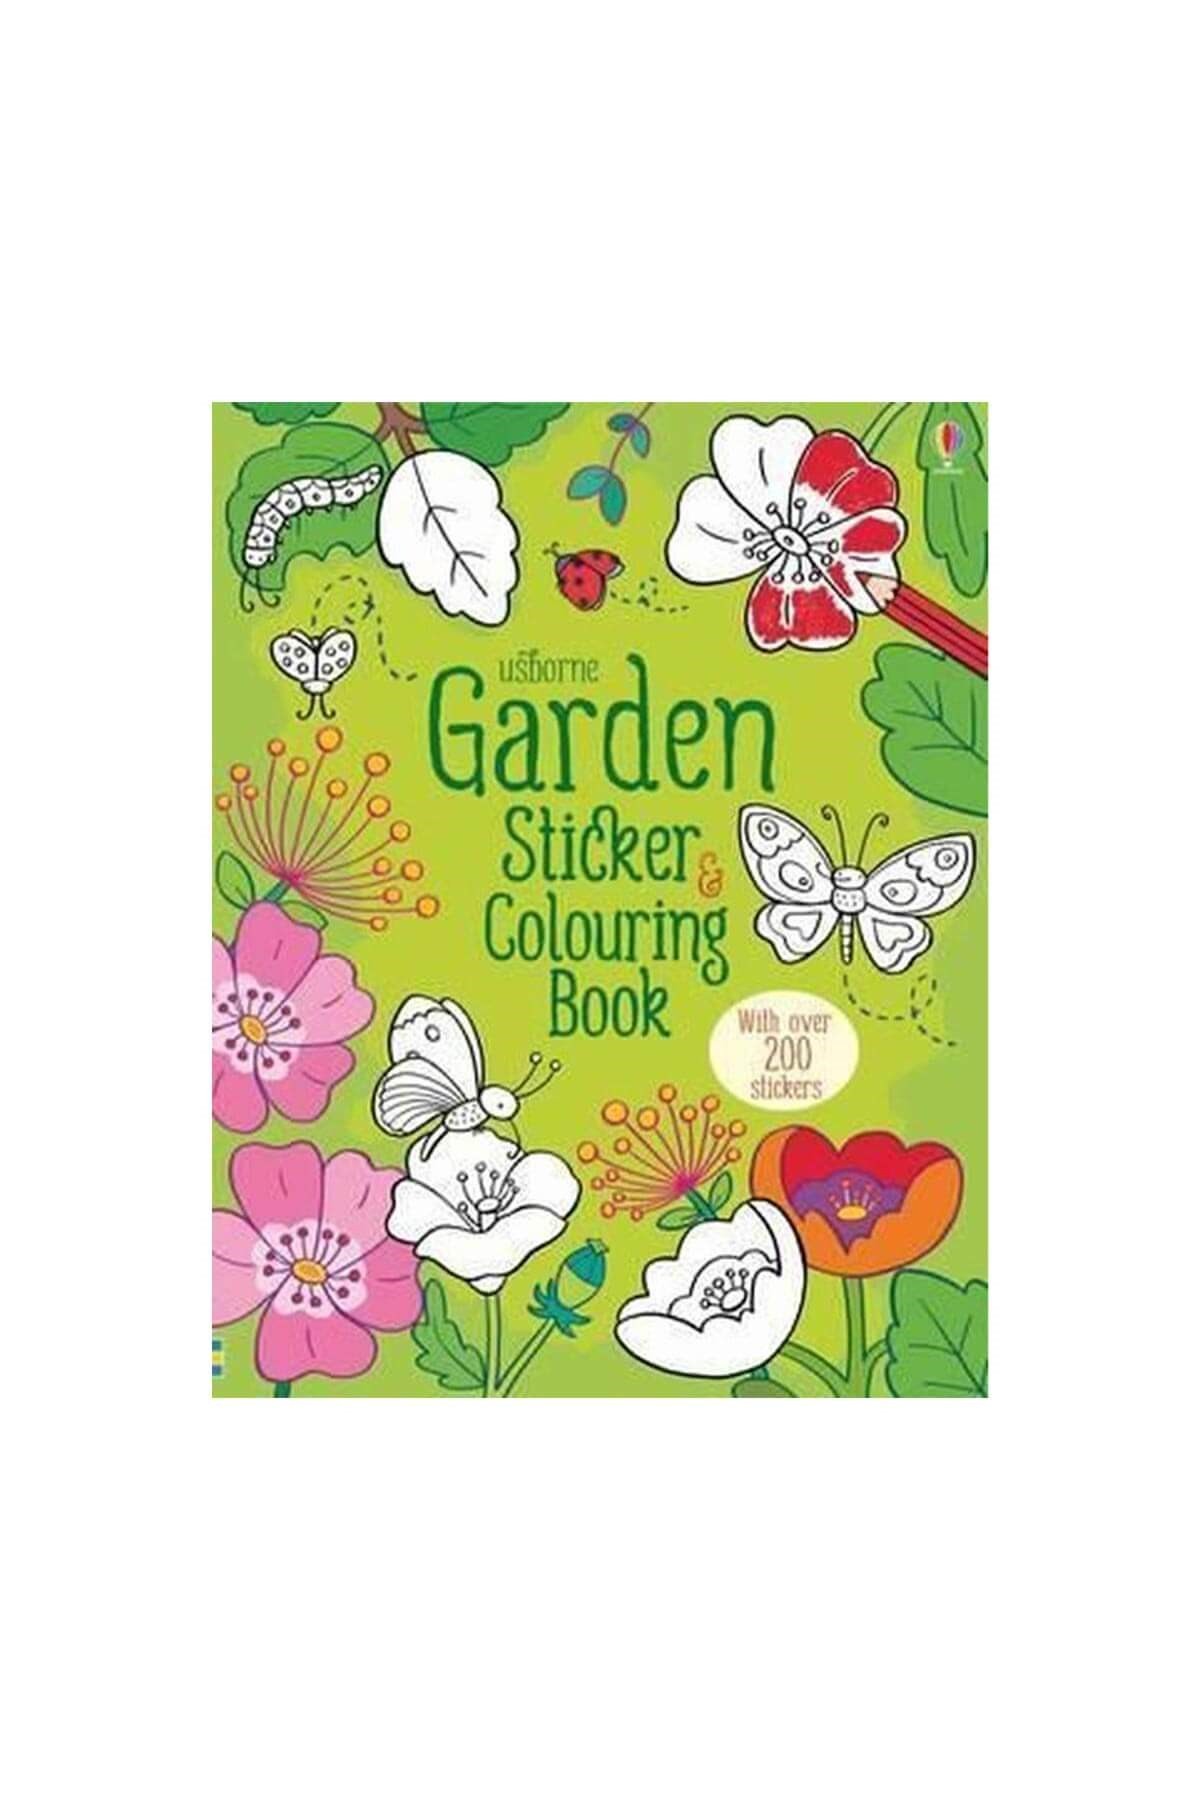 The Usborne Garden Sticker & Colouring Book